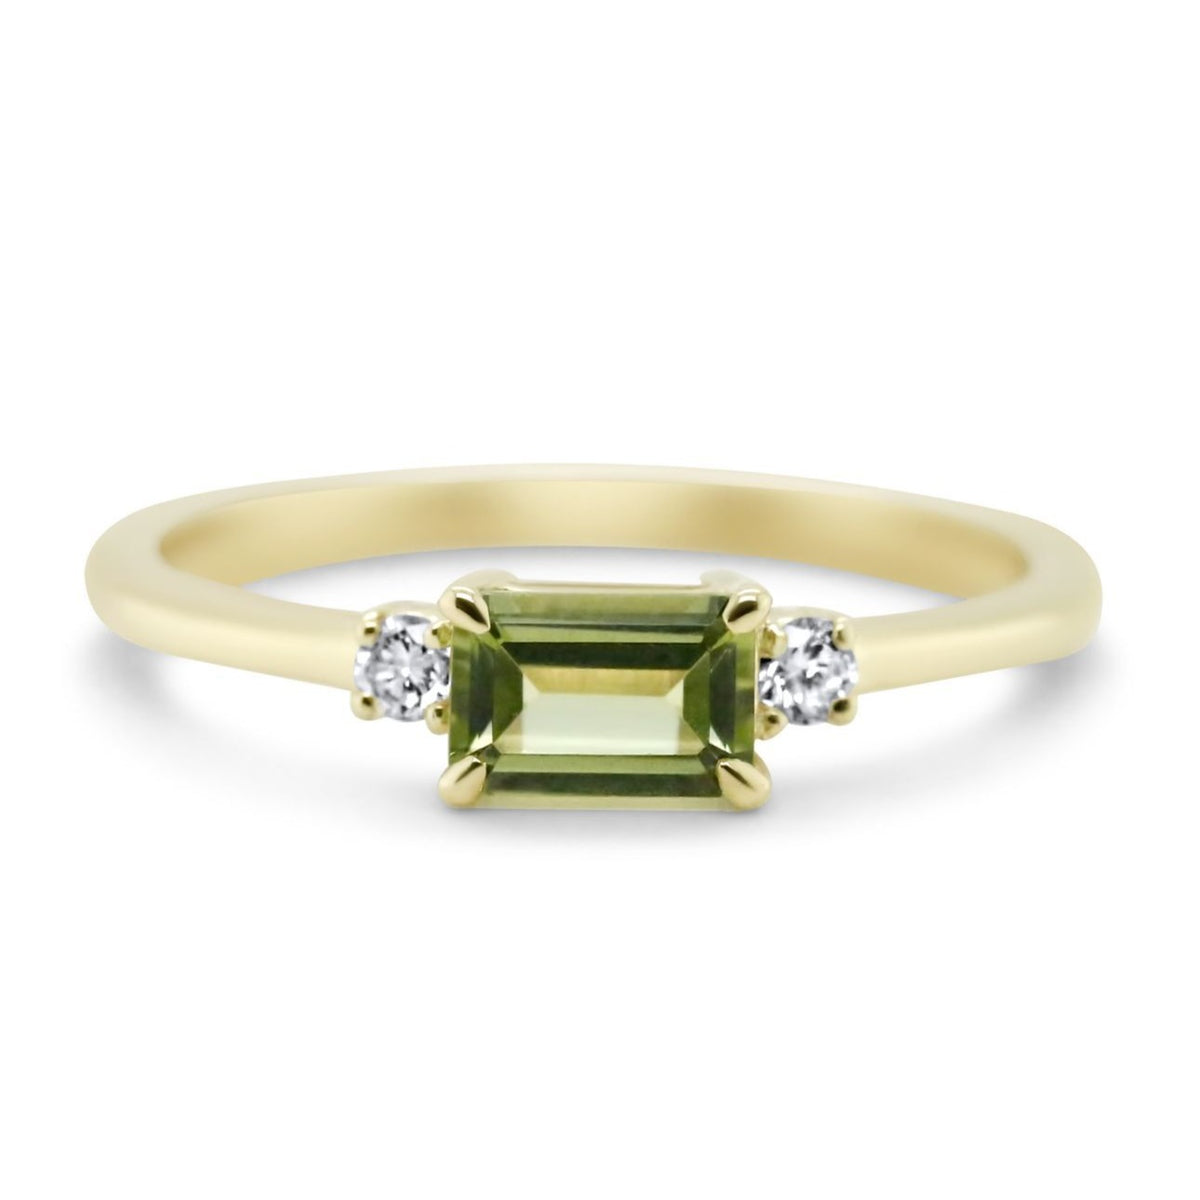 14k yellow gold three stone ring with 0.76ct emerald cut peridot and round cut diamonds